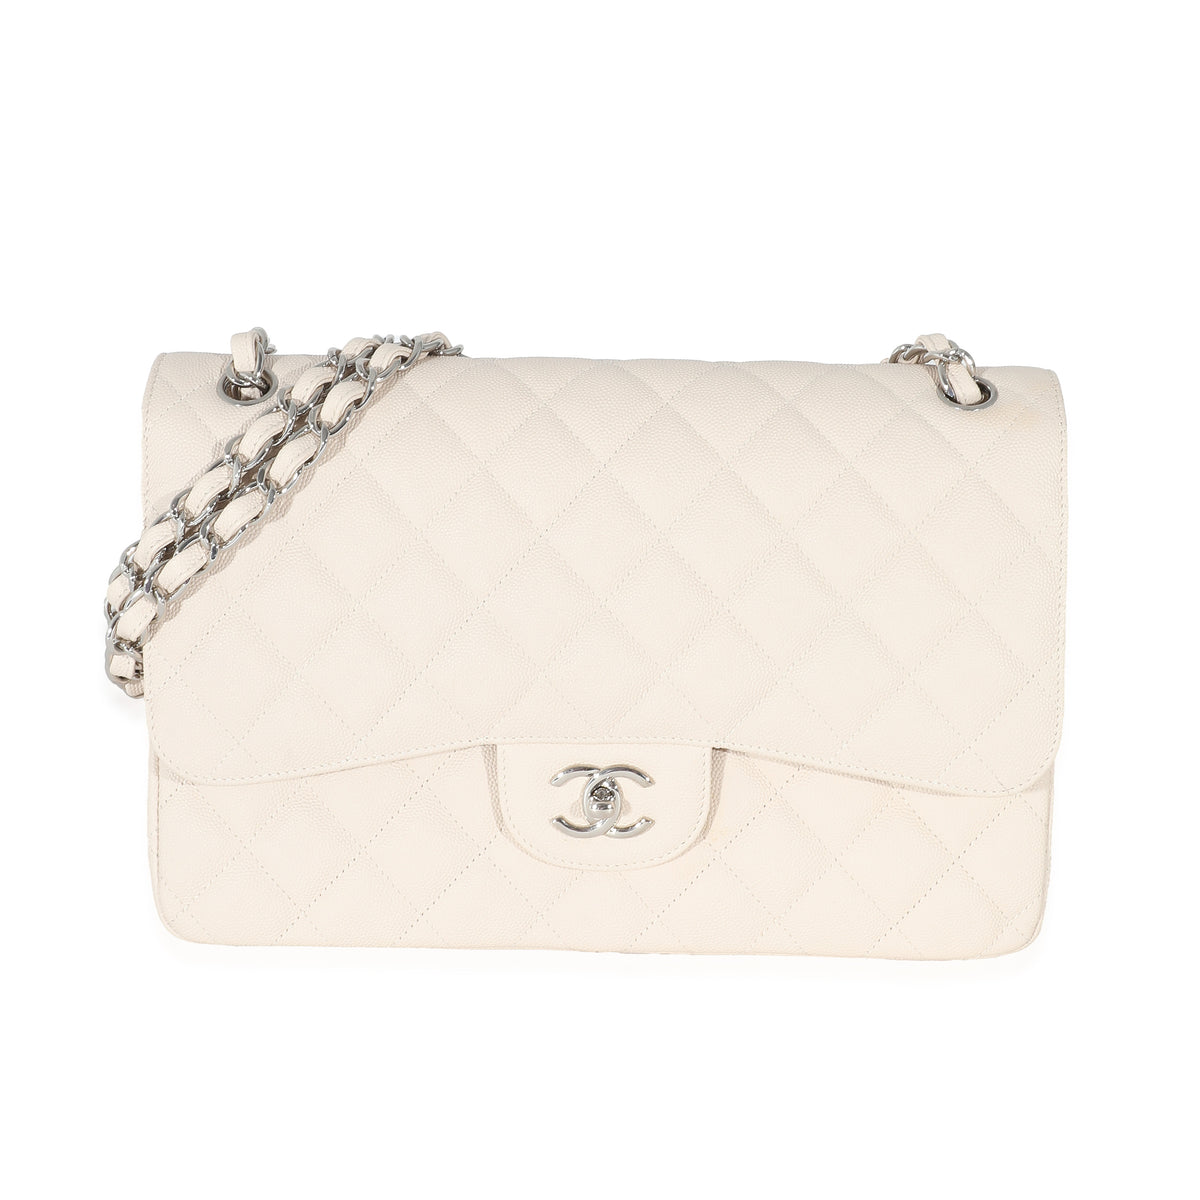 Chanel Beige Caviar Classic Jumbo Double Flap Bag